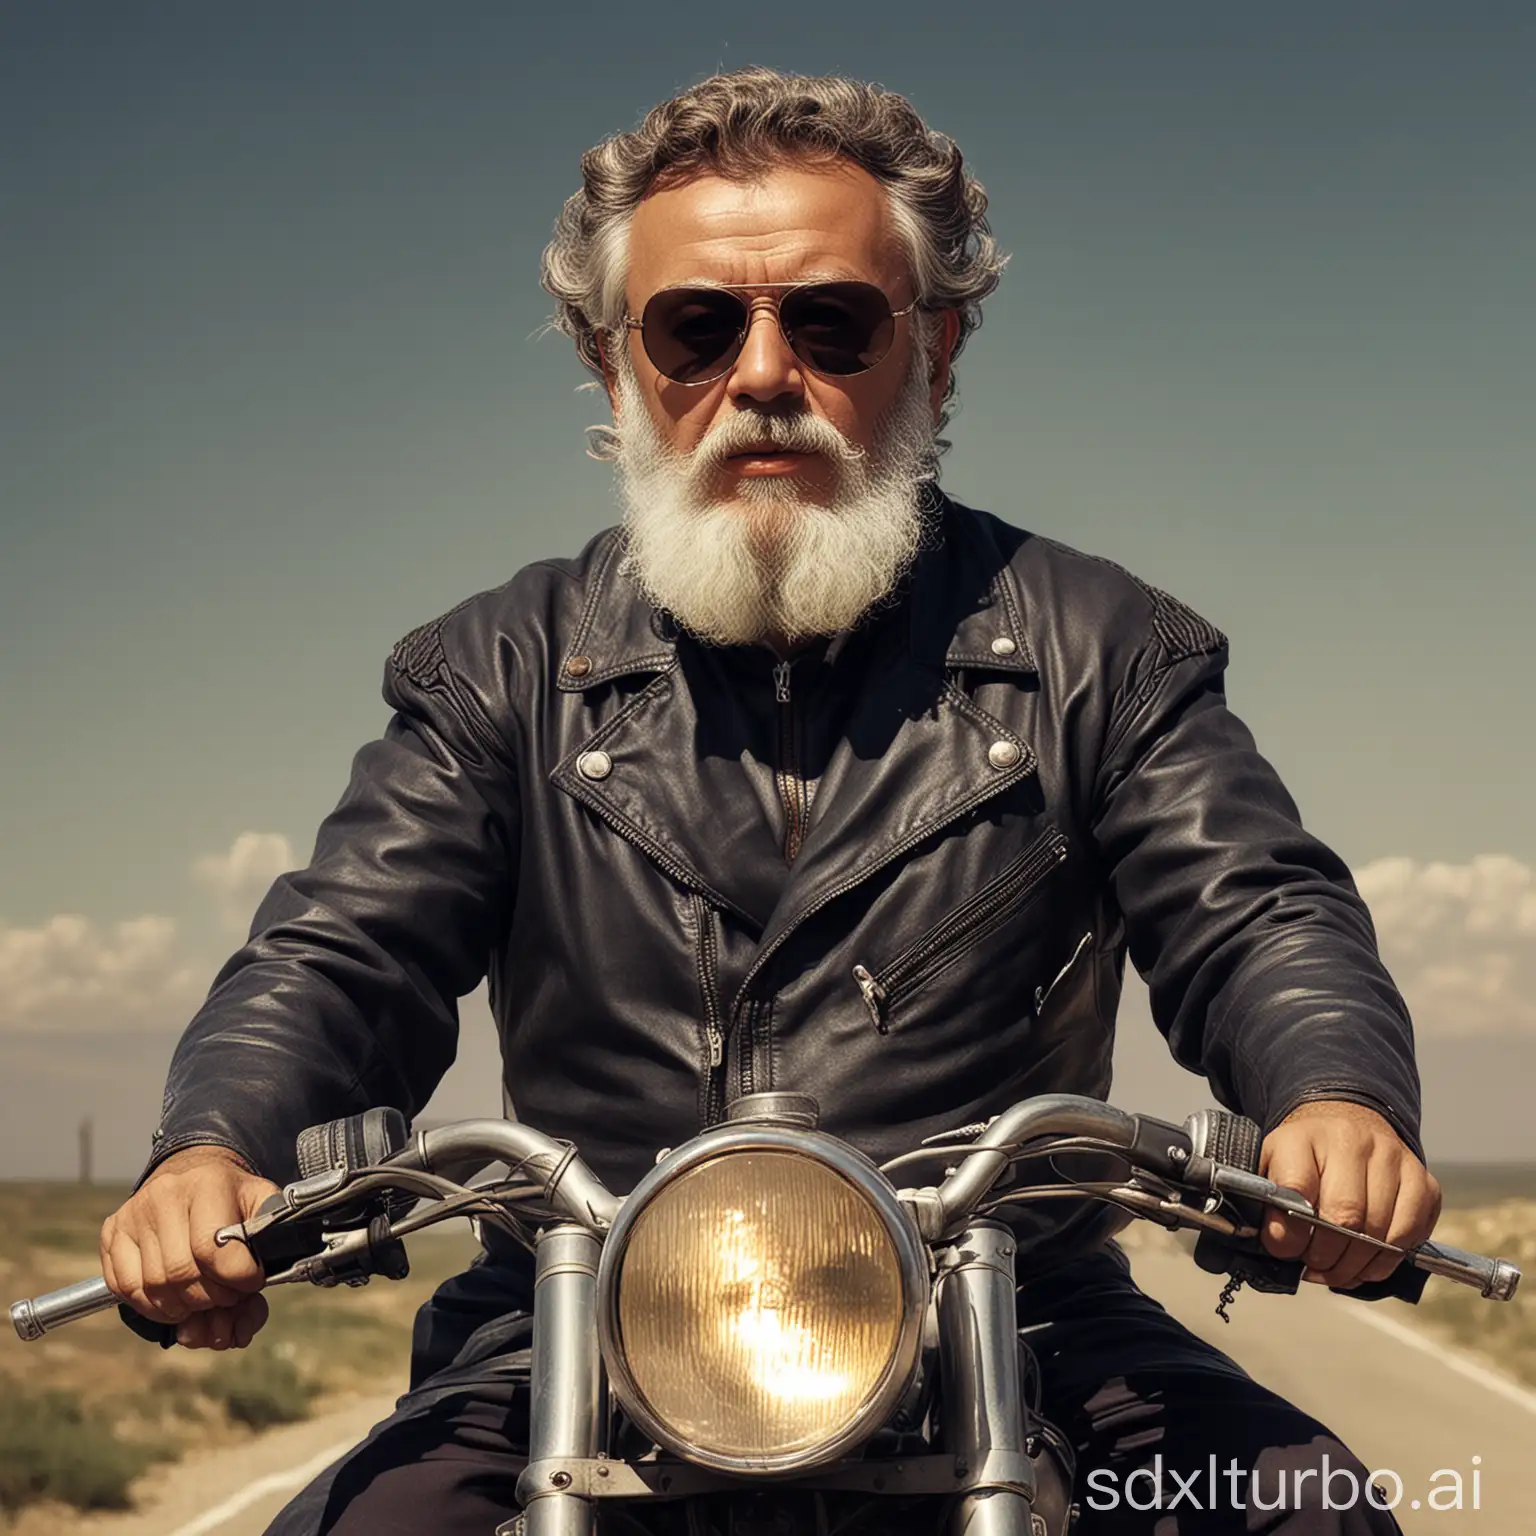 Galileo-Galilei-Riding-Motorcycle-Wearing-Sunglasses